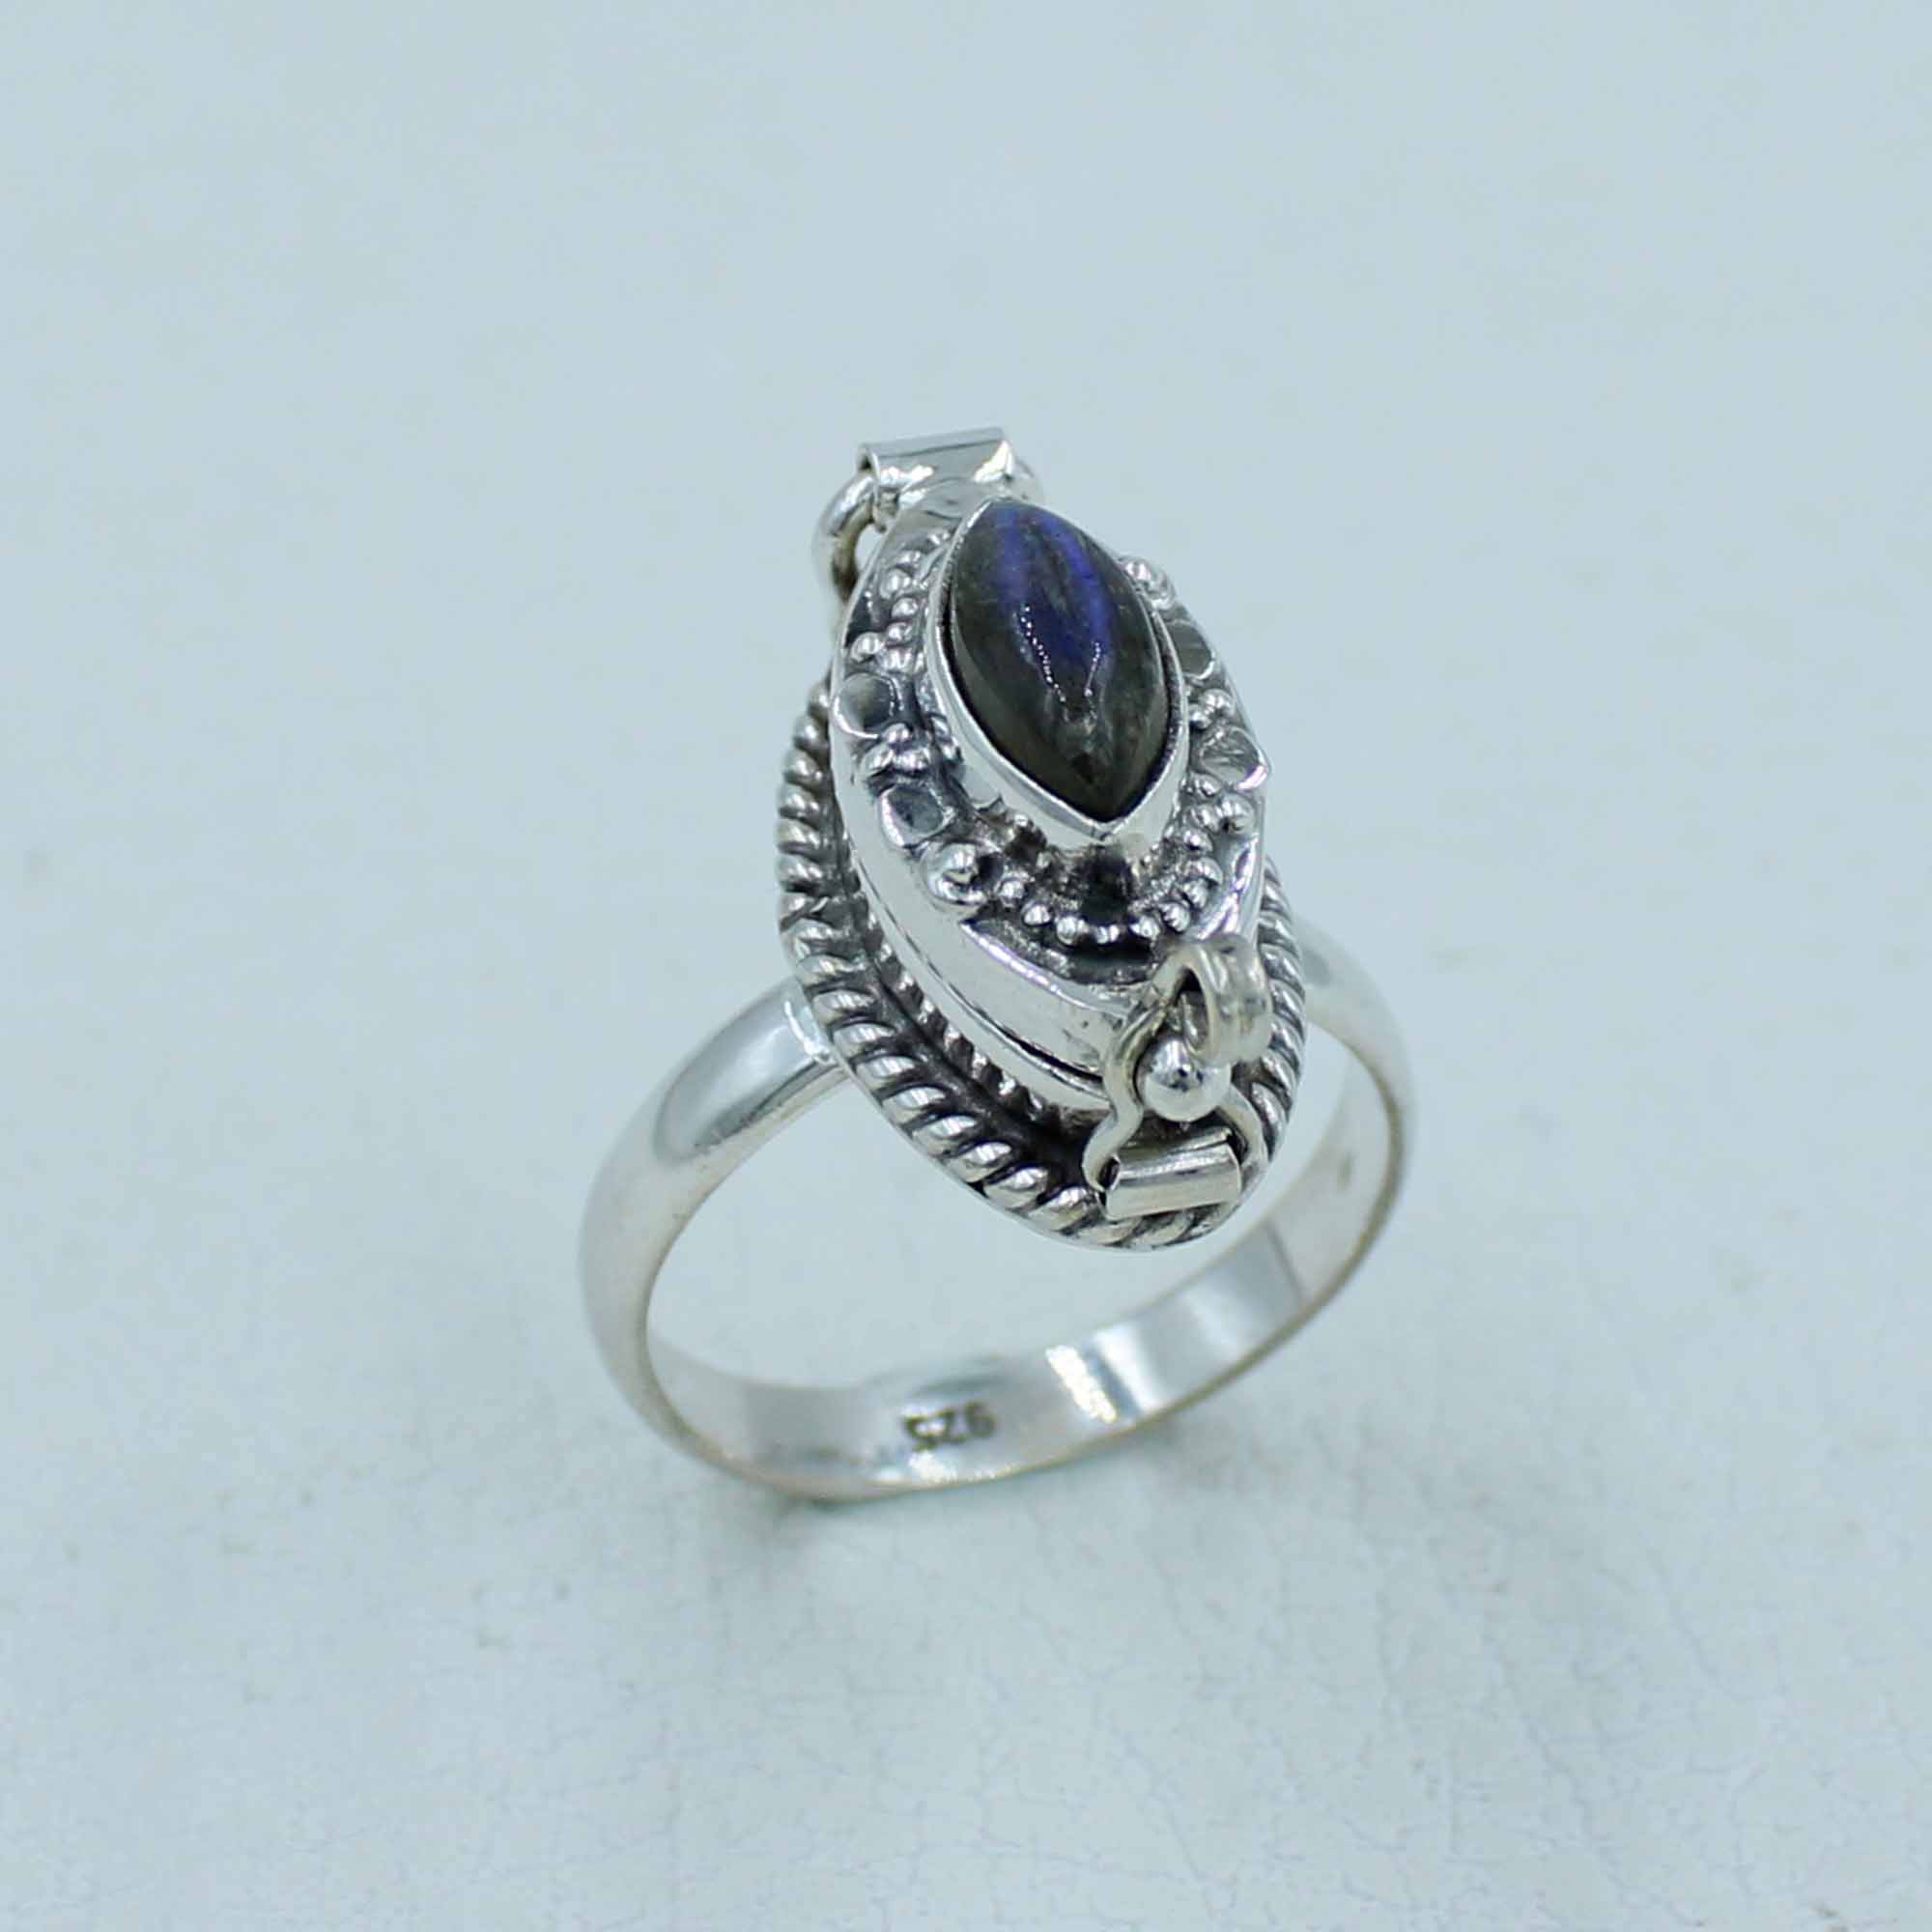 Labradorite Sterling Silver Ring - Secret Box Jewelry